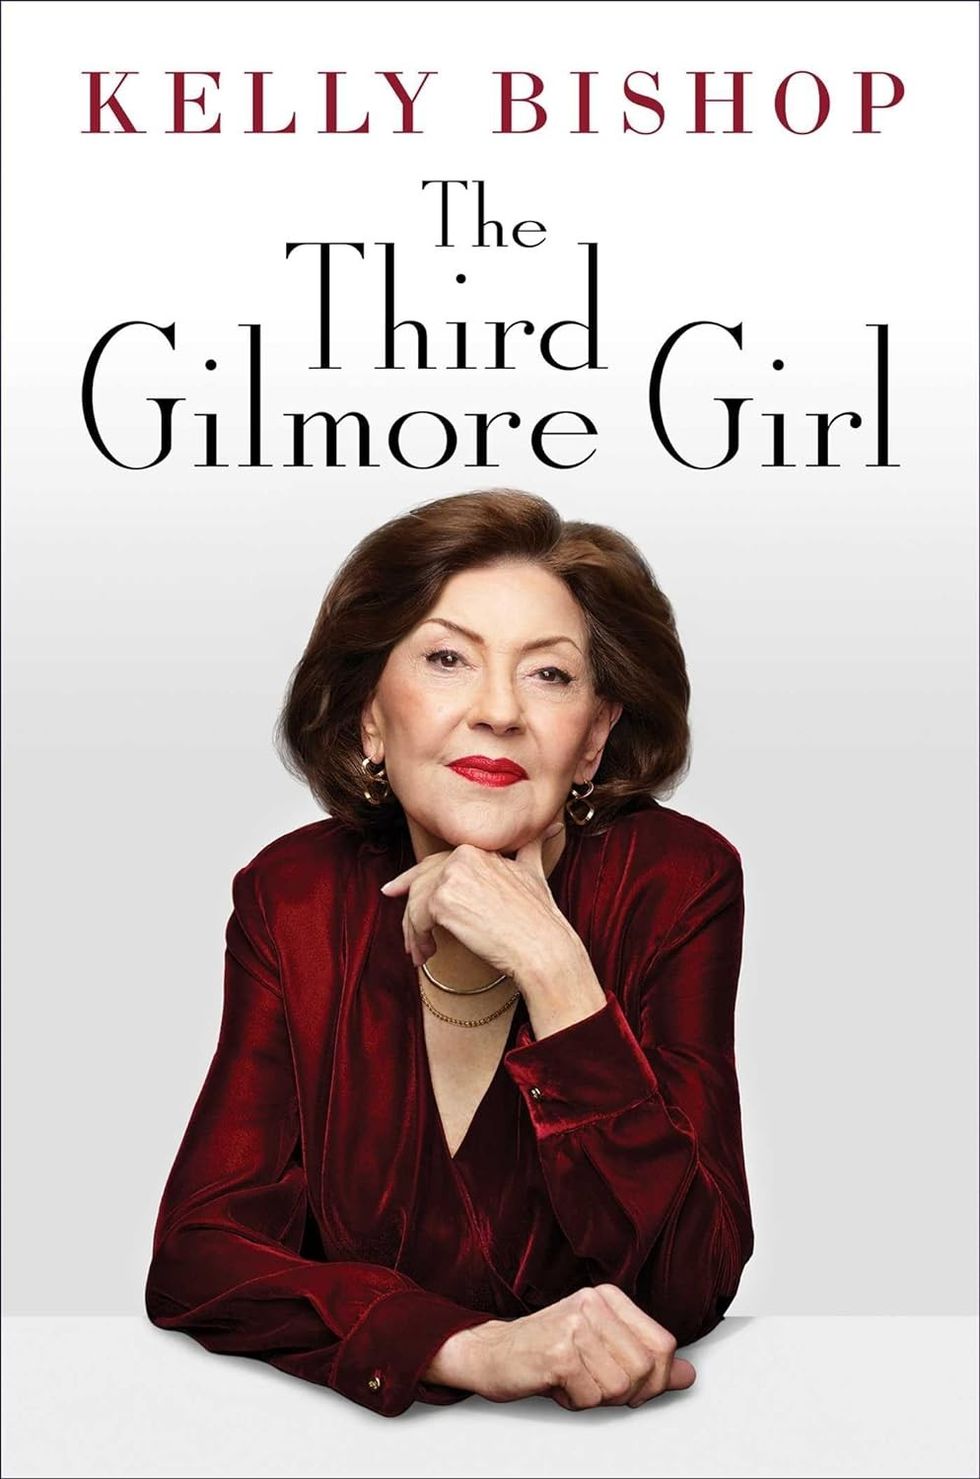 "The Third Gilmore Girl"